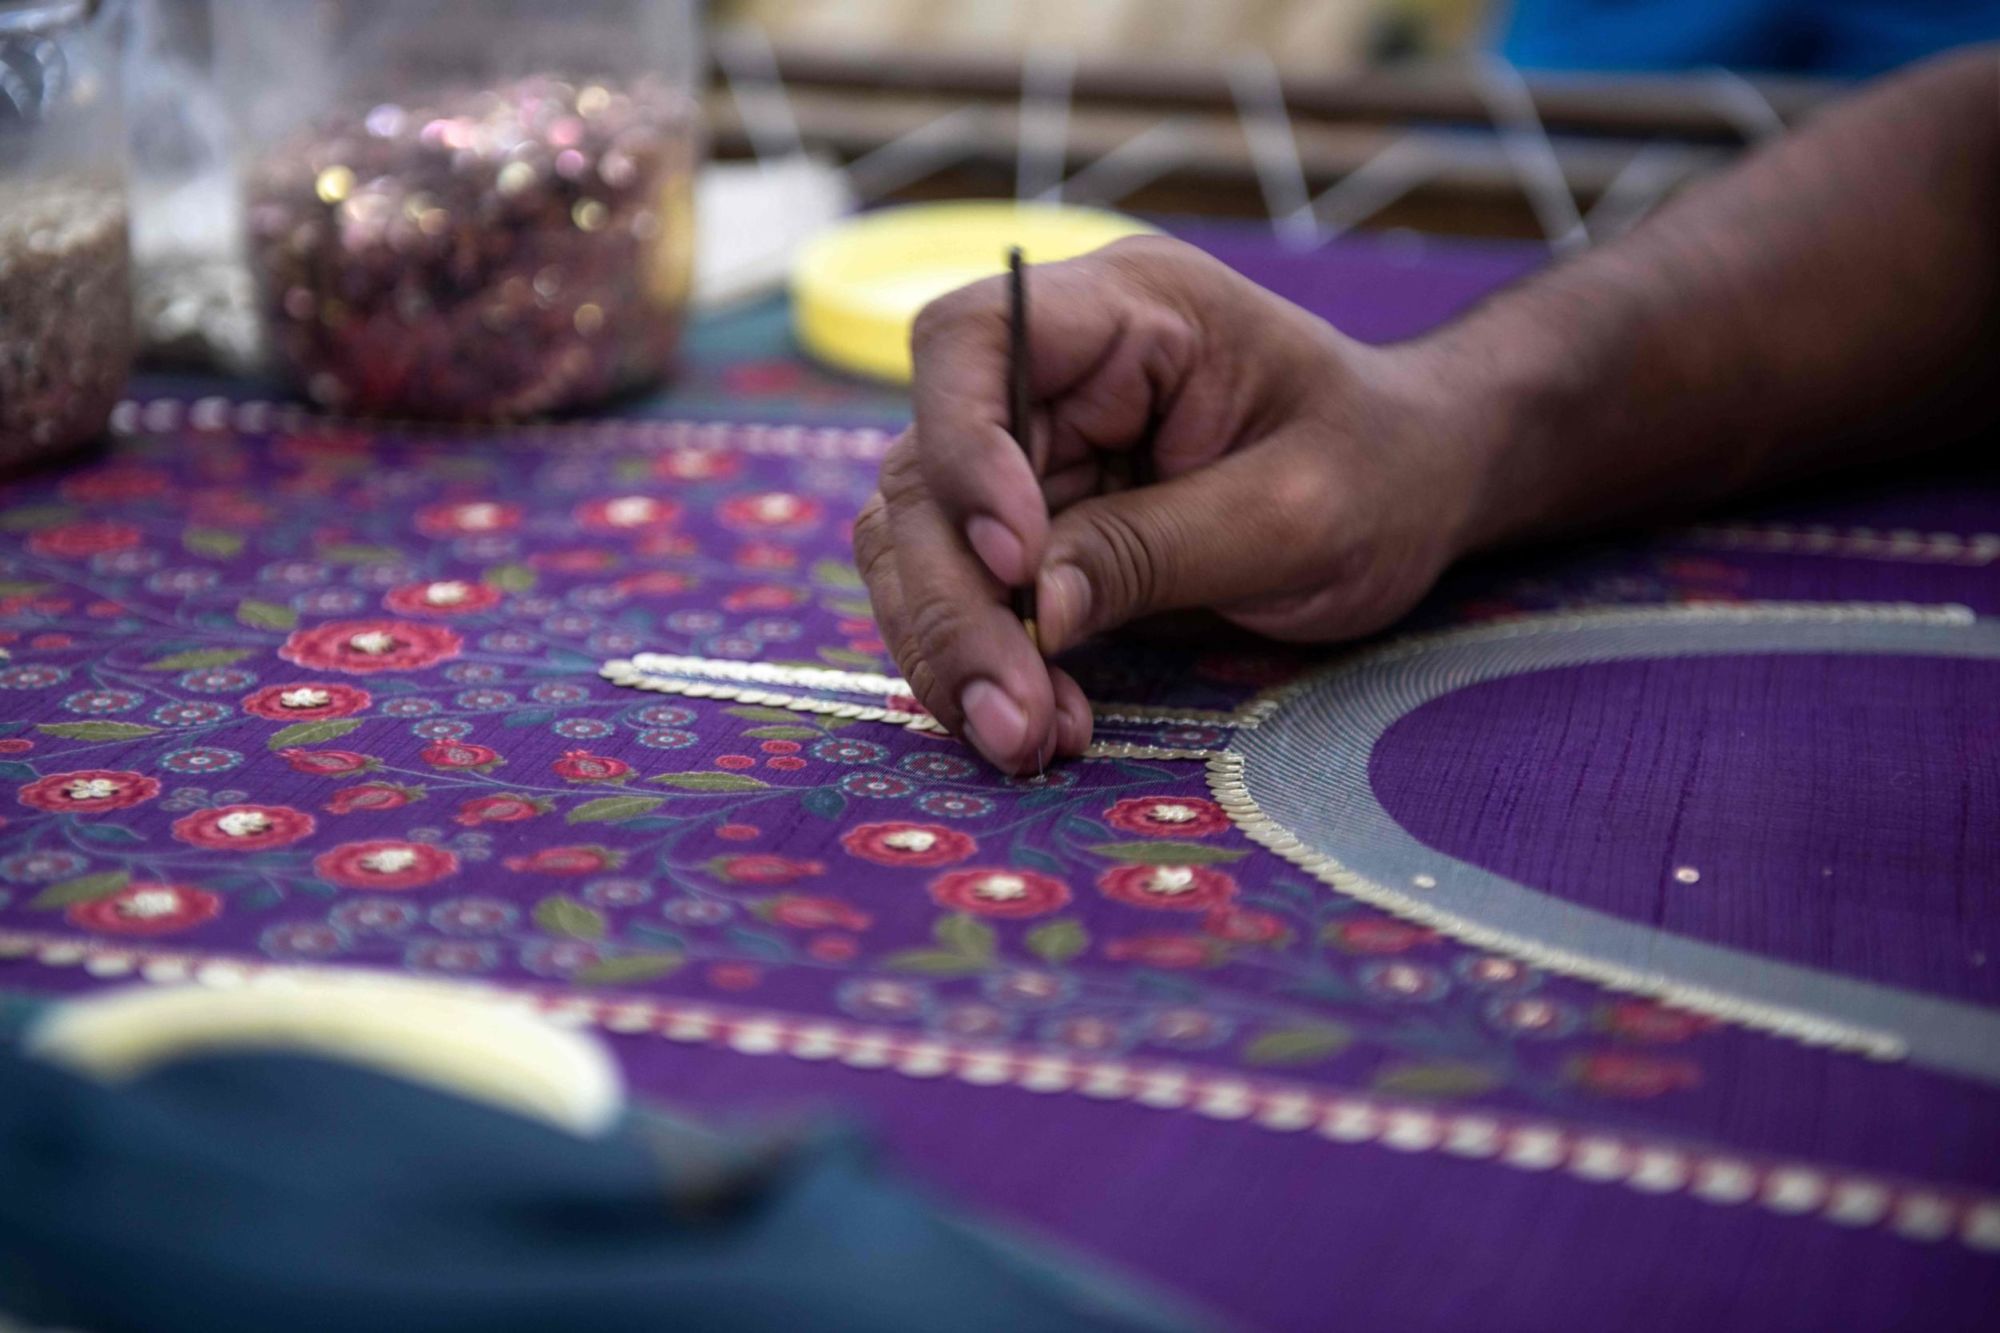 03 india embroidery 2020 FILE